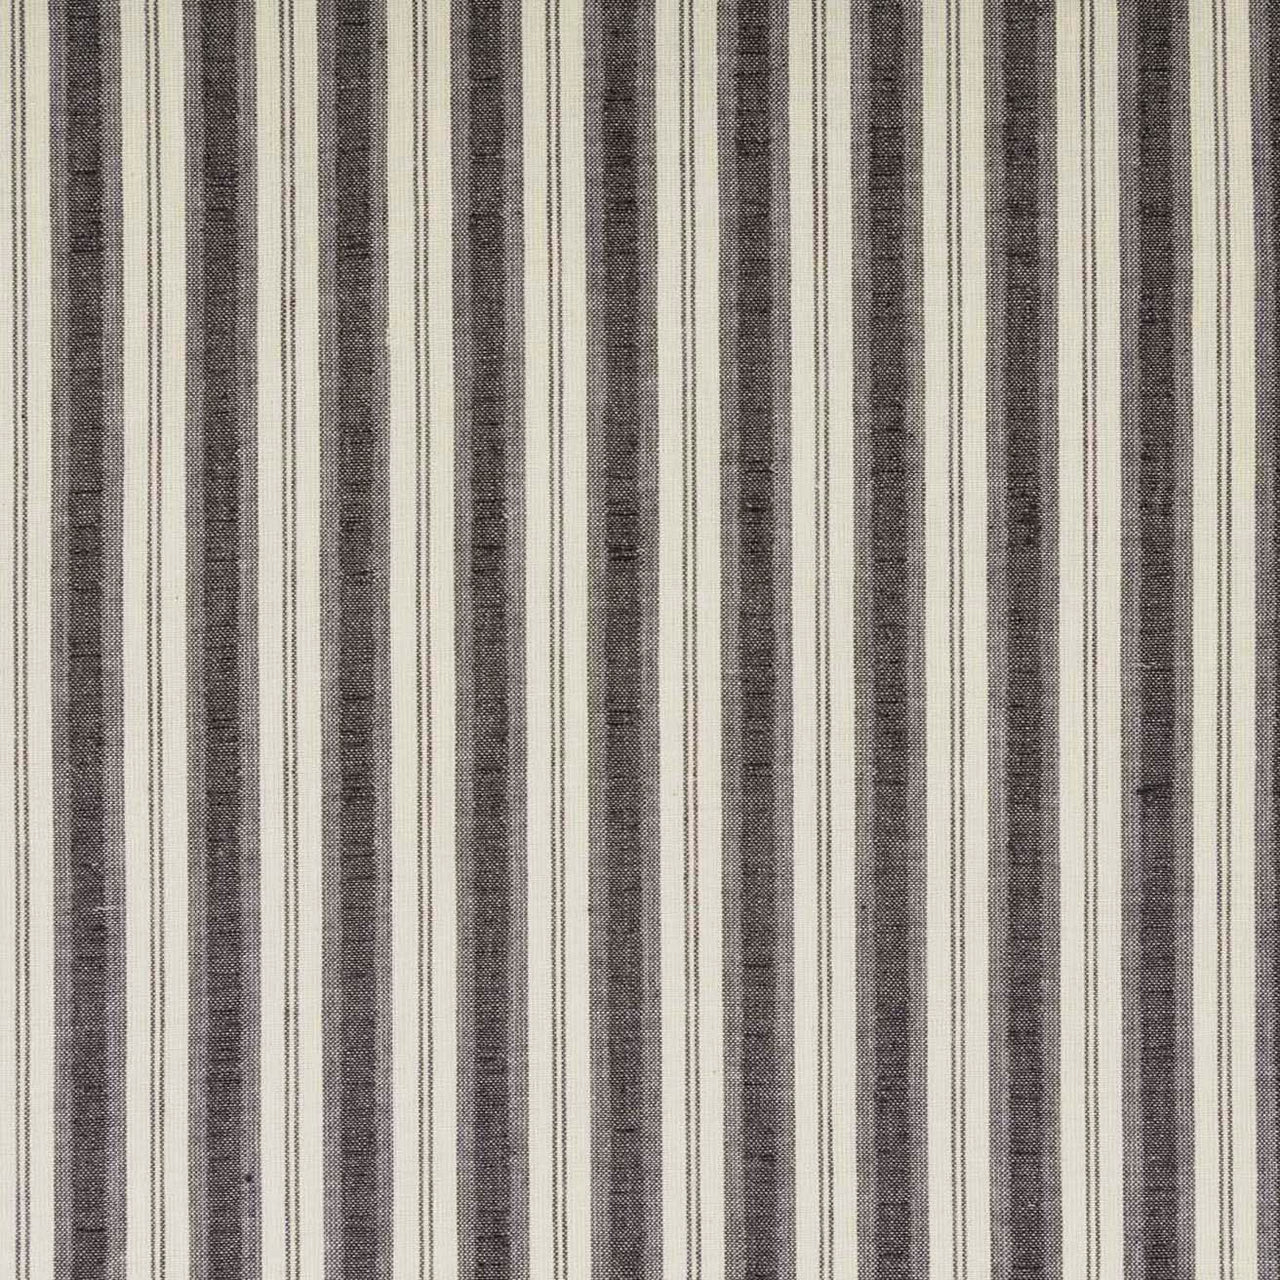 Ashmont Ticking Stripe Prairie Swag Set of 2 36x36x18 VHC Brands